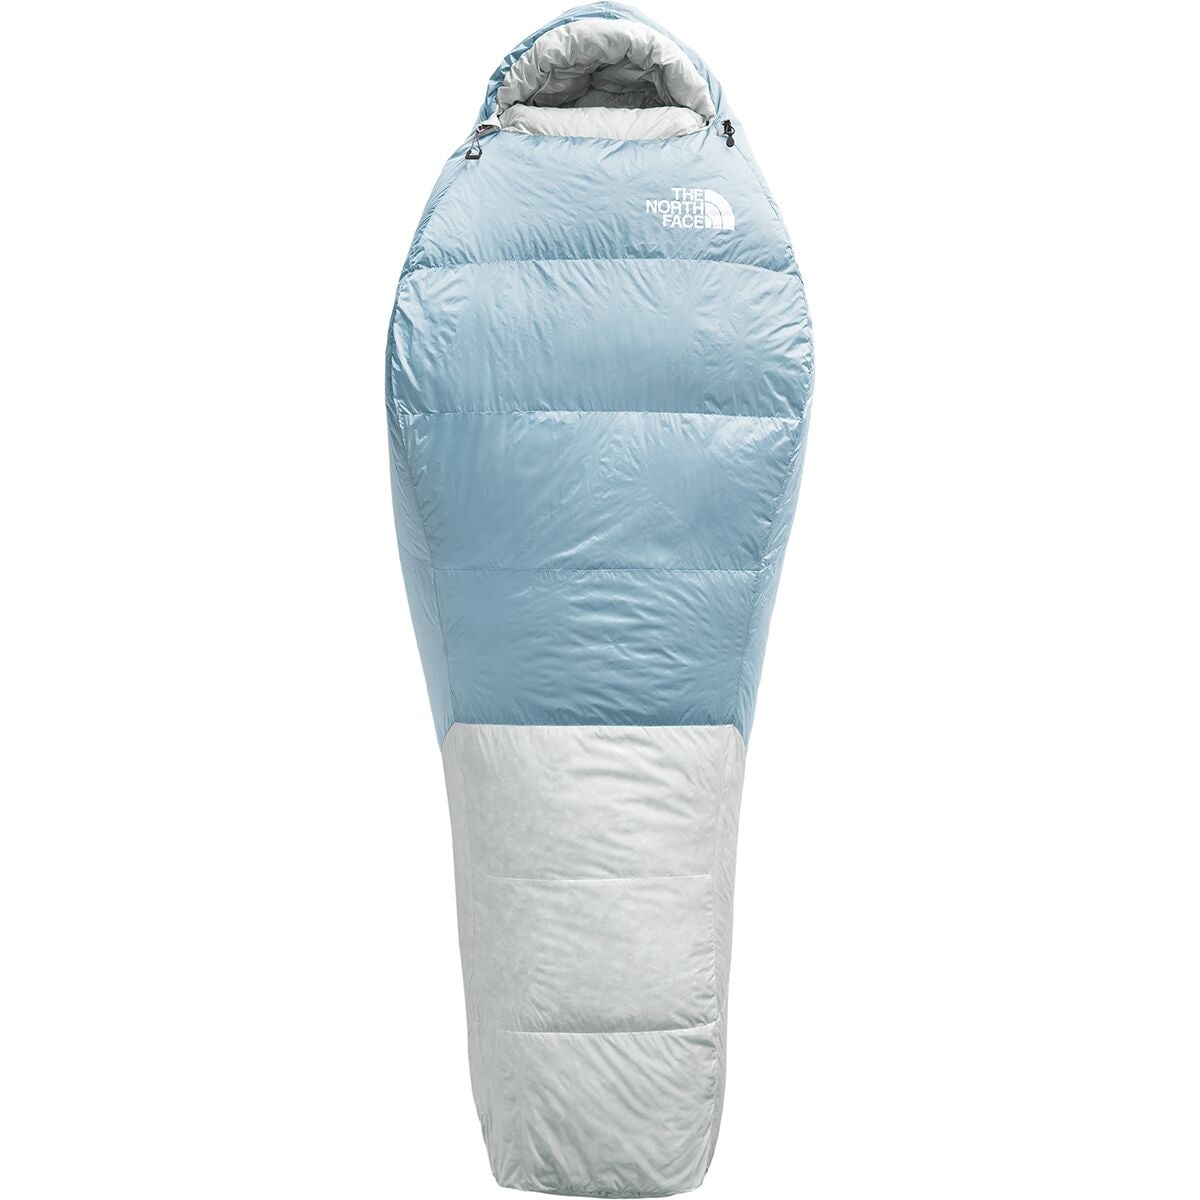 The North Face Blue Kazoo Sleeping Bag: 15F Down - Women's